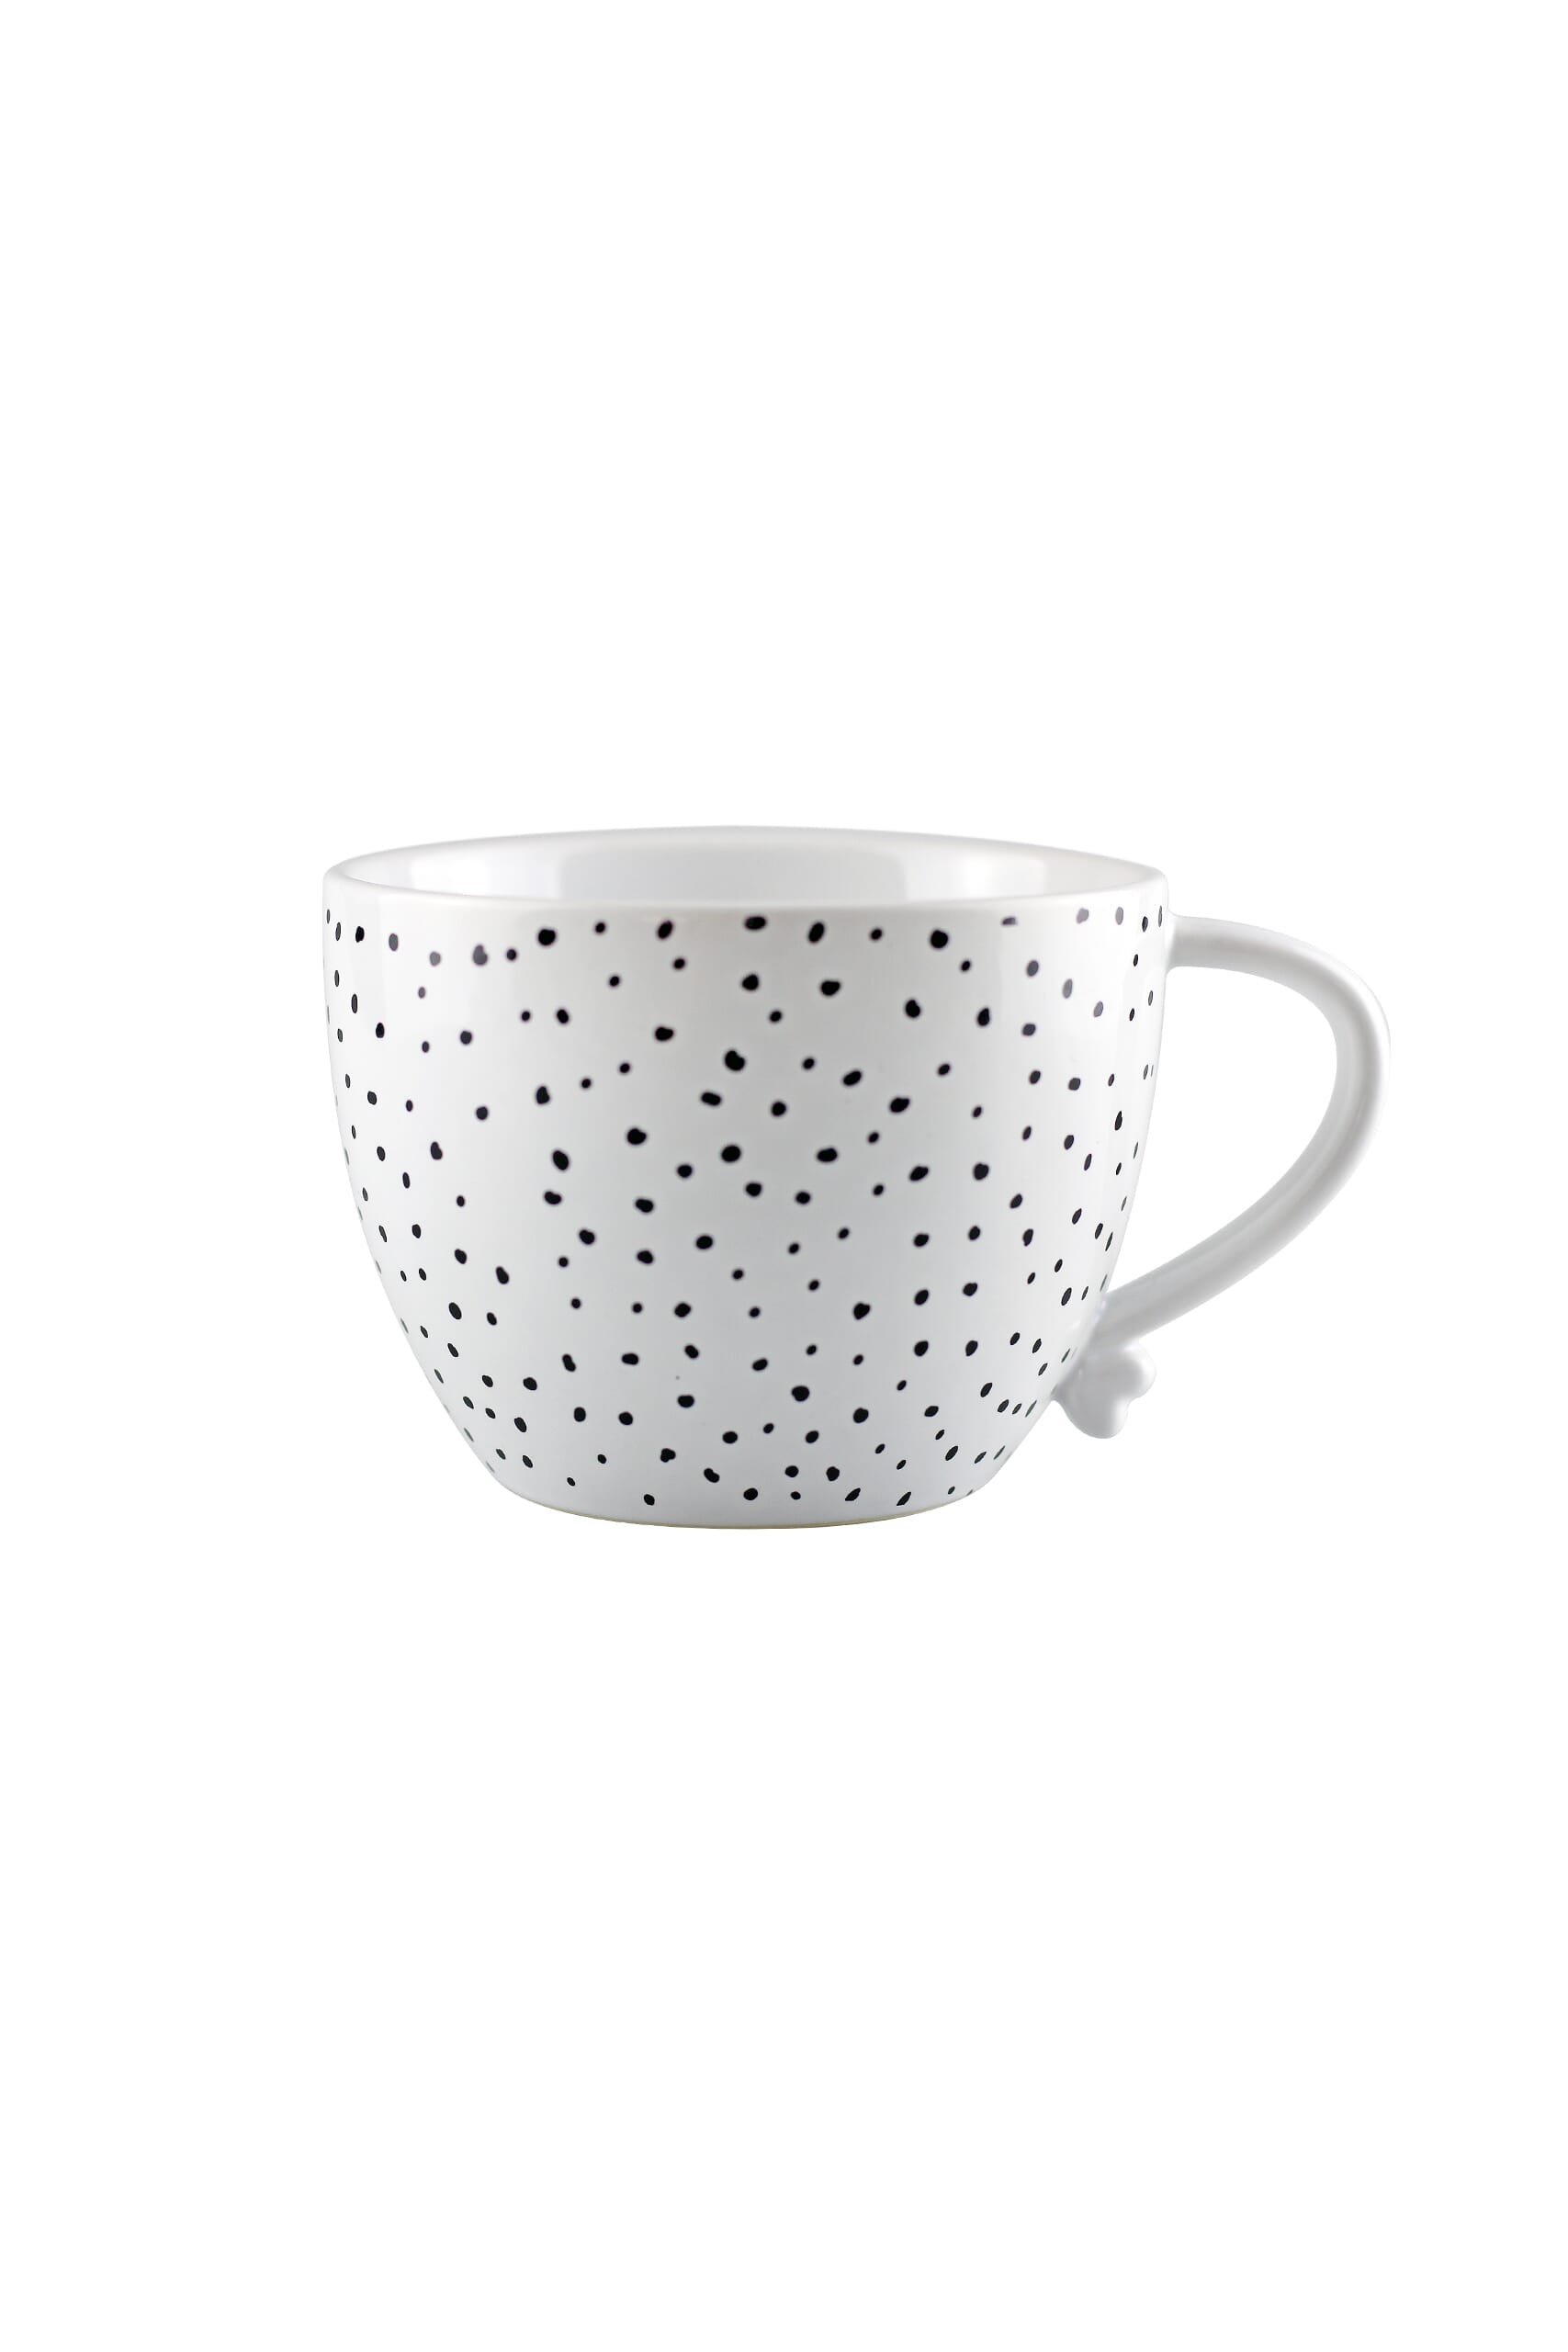 Heart Handled Ceramic Mug - Dots | Pretty Little Home